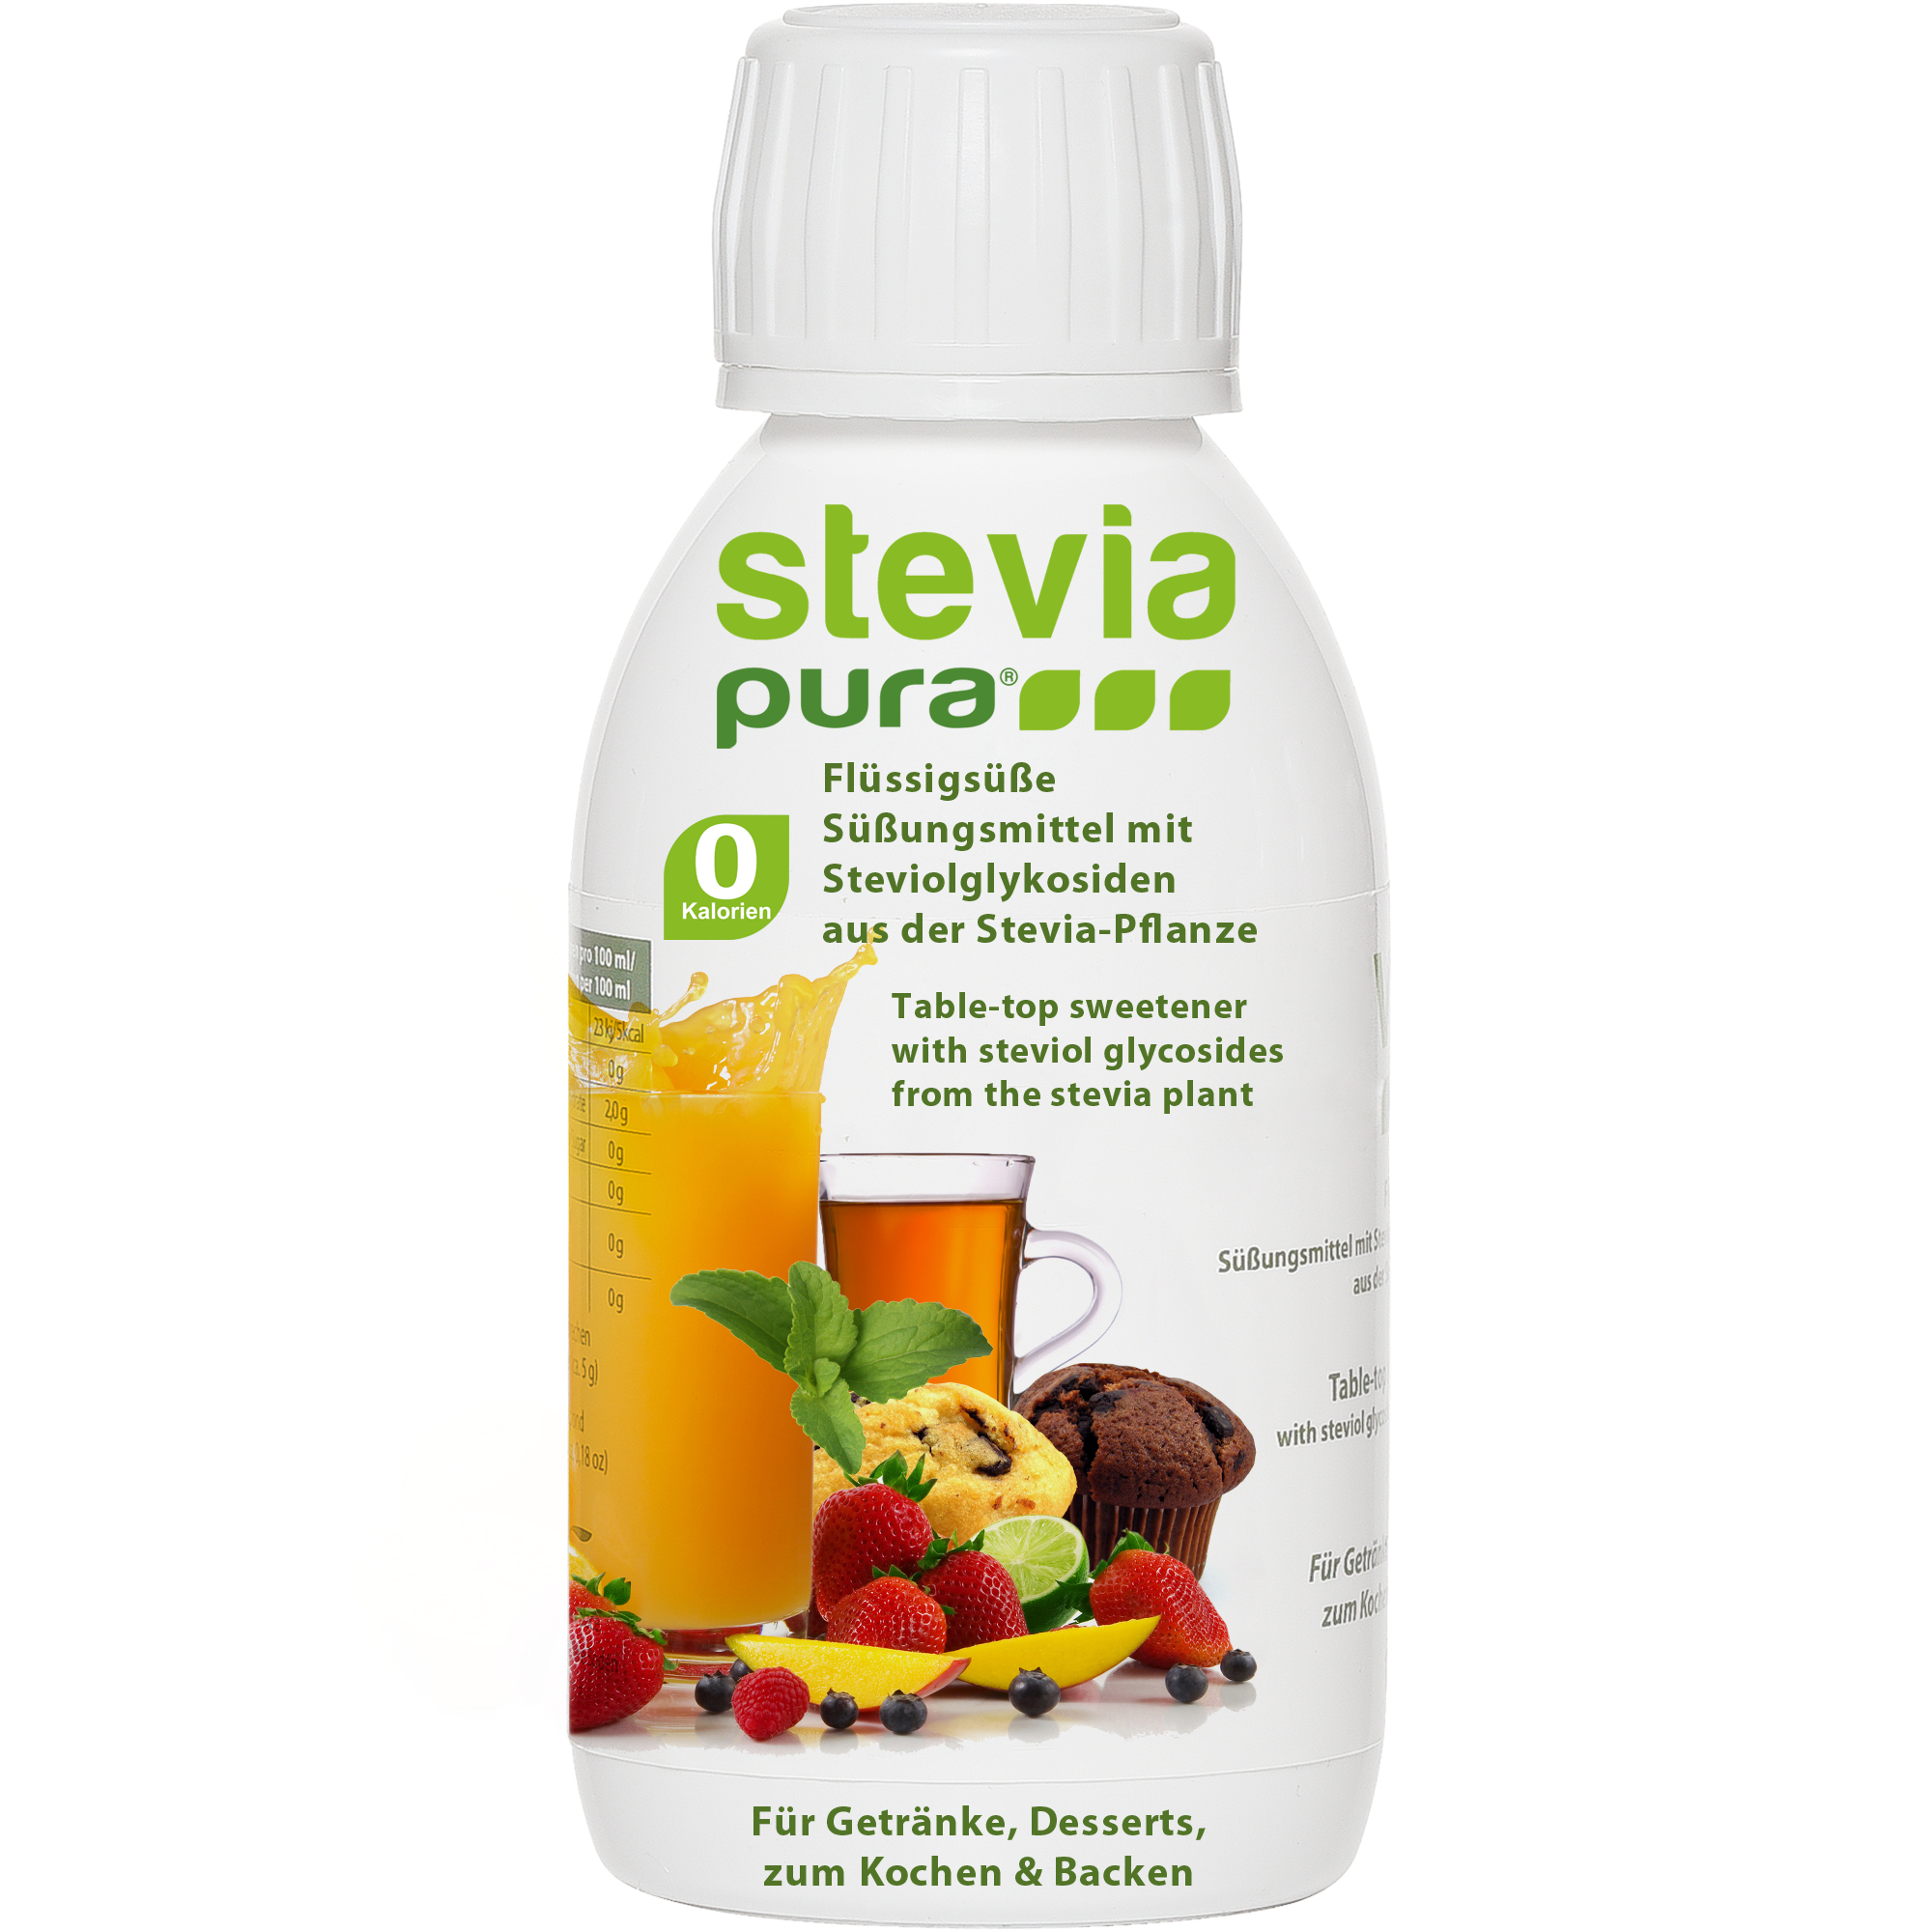 A quality product from the Stevia Group: steviapura Stevia liquid liquid sweetener.